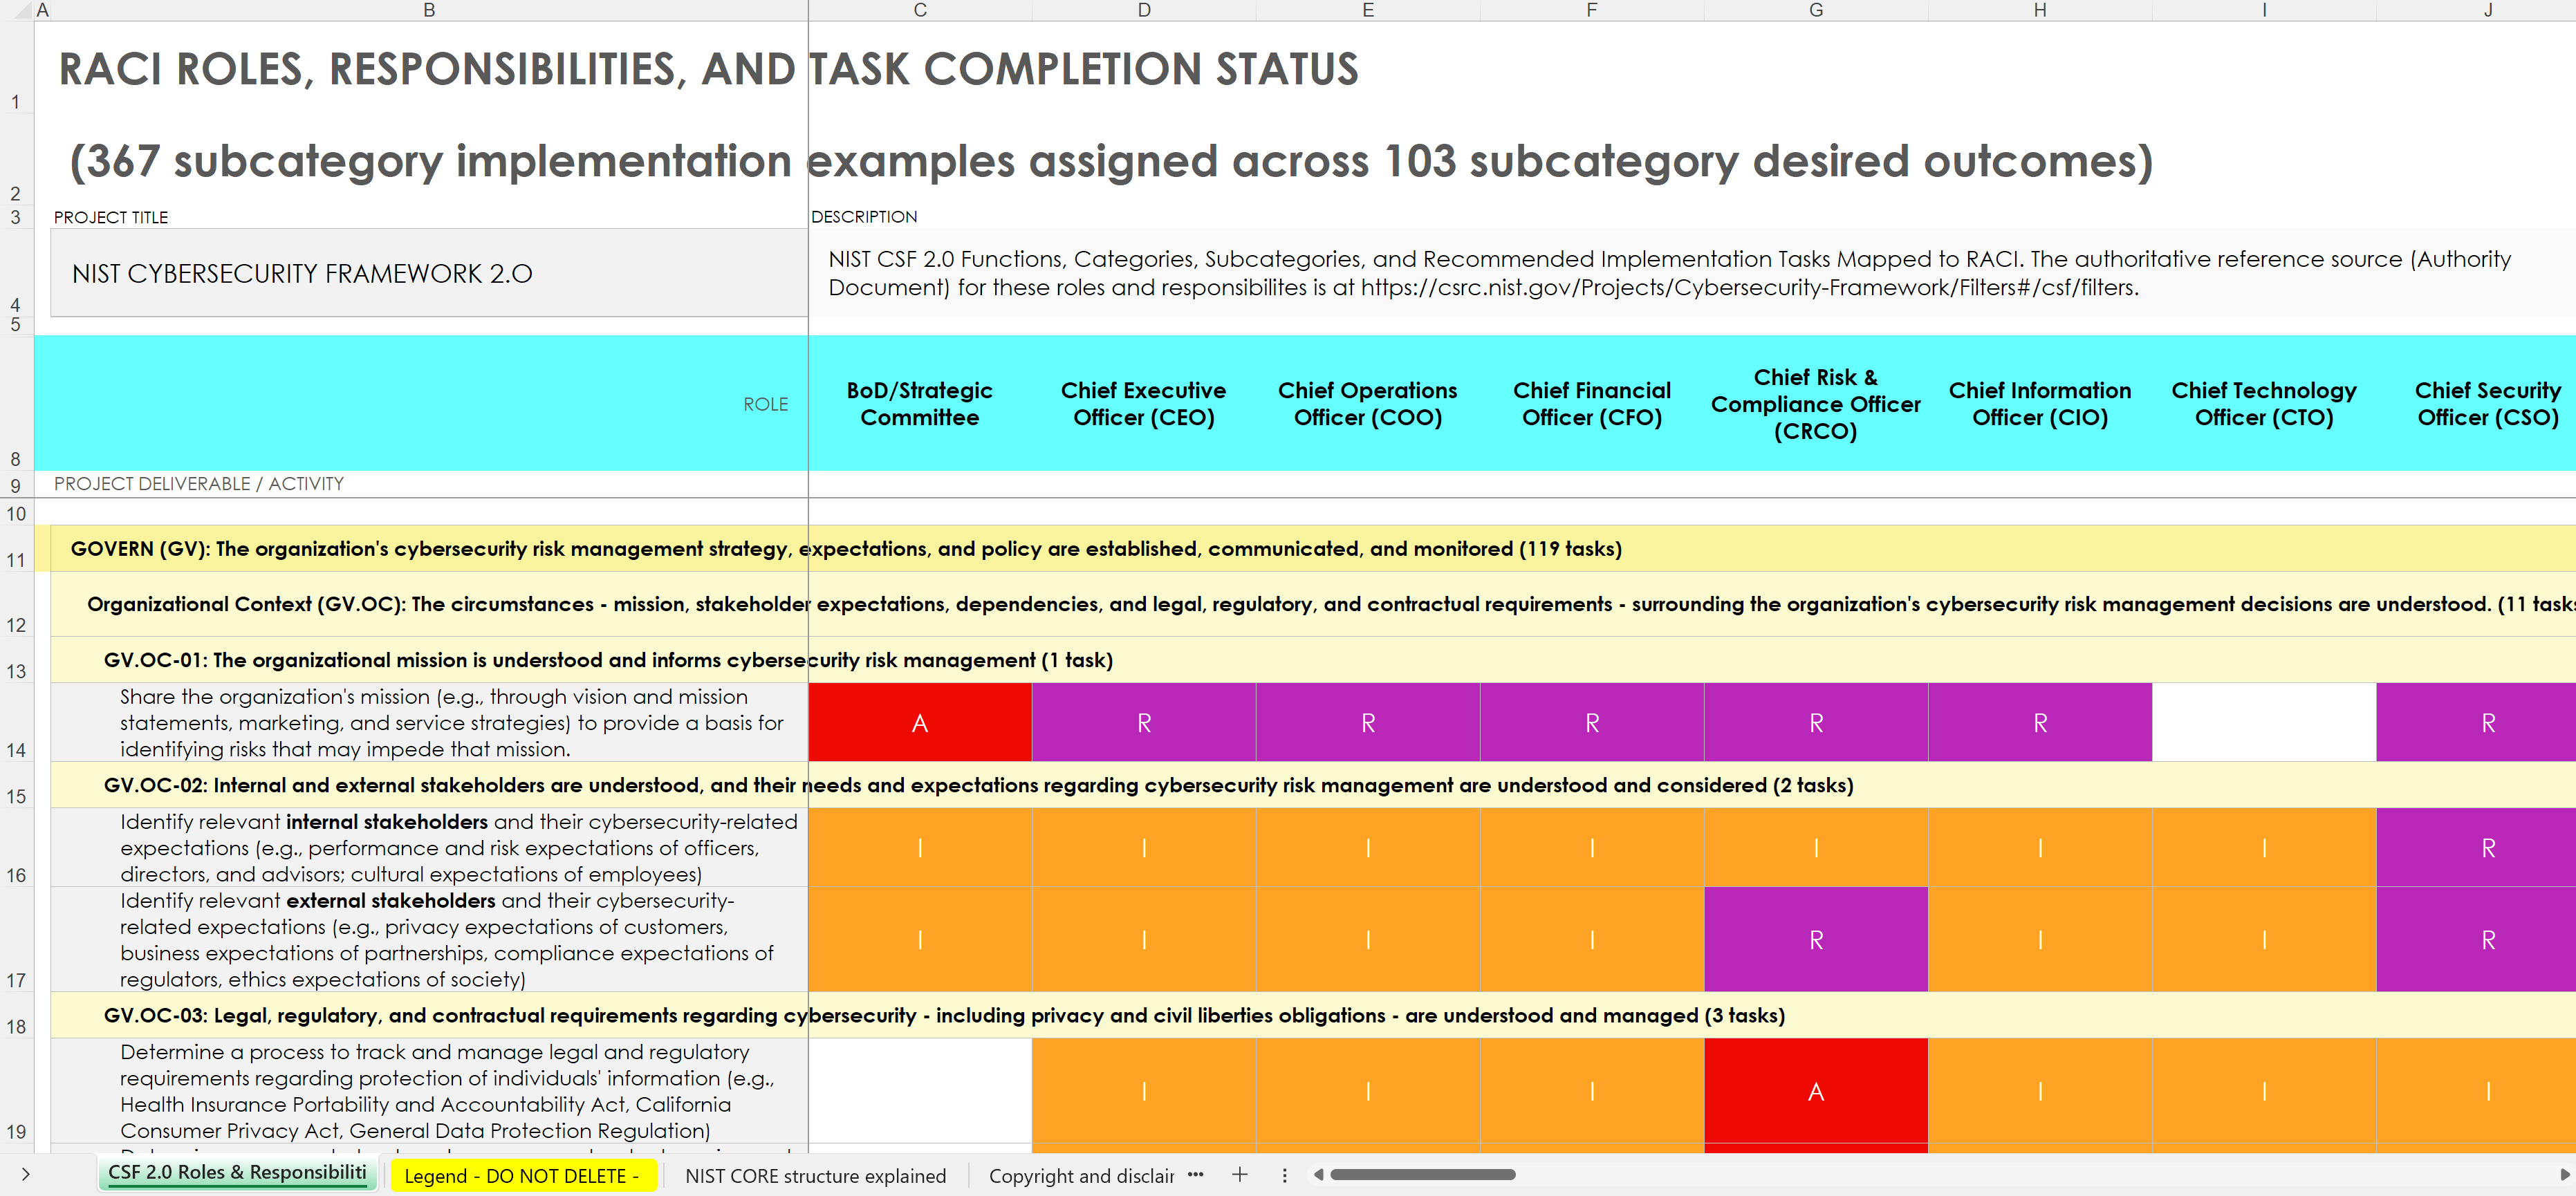 NIST Cybersecurity Framework 2.0 Roles and Responsibilities RACI Matrix & CSF 2.0 Profile Template Tool